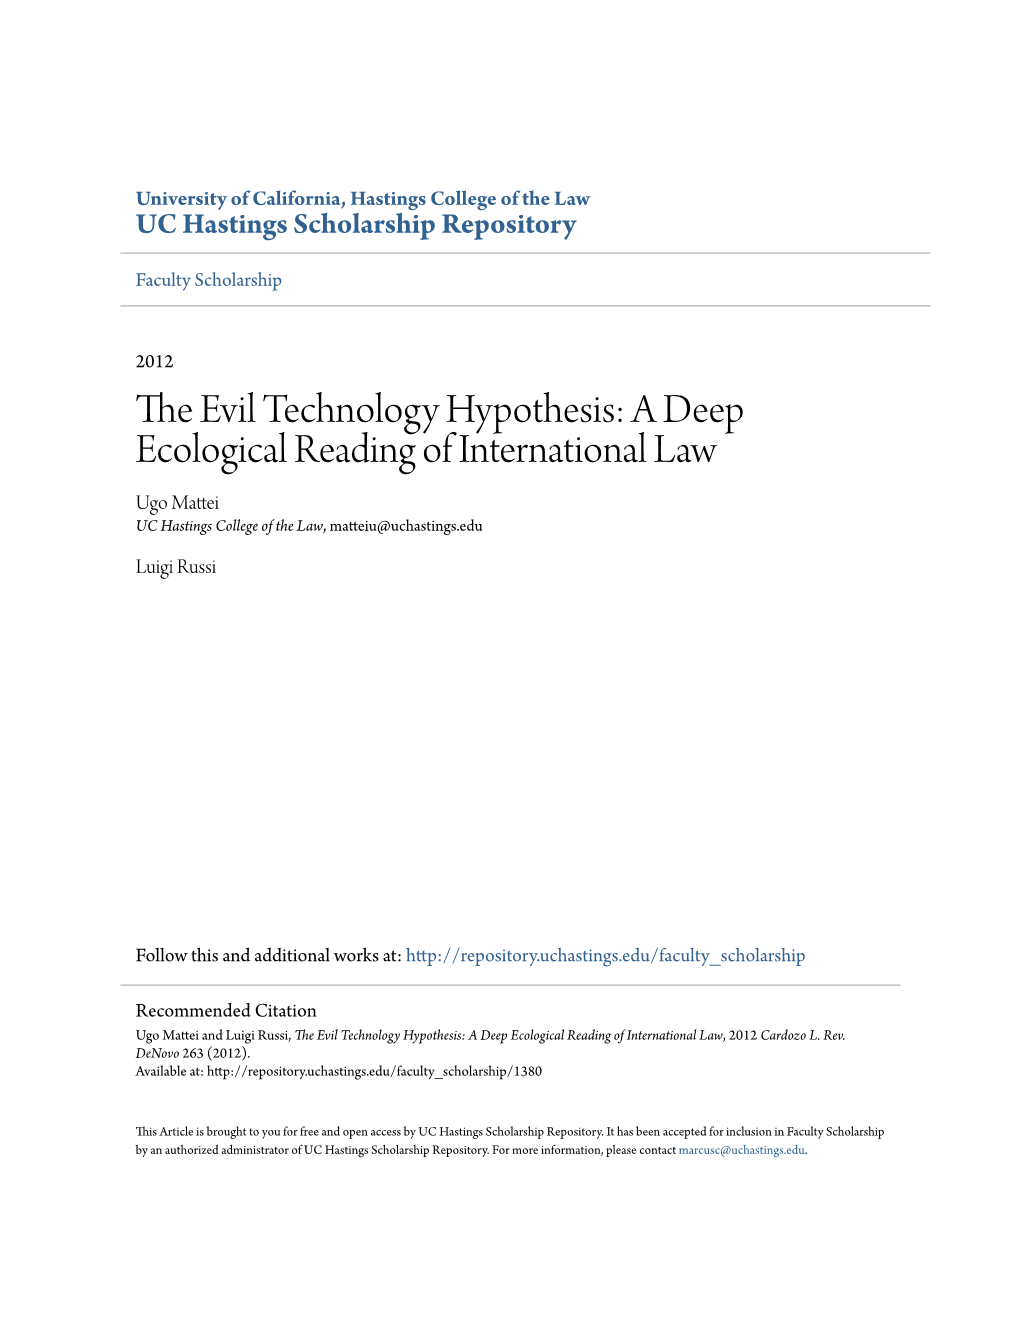 A Deep Ecological Reading of International Law Ugo Mattei UC Hastings College of the Law, Matteiu@Uchastings.Edu